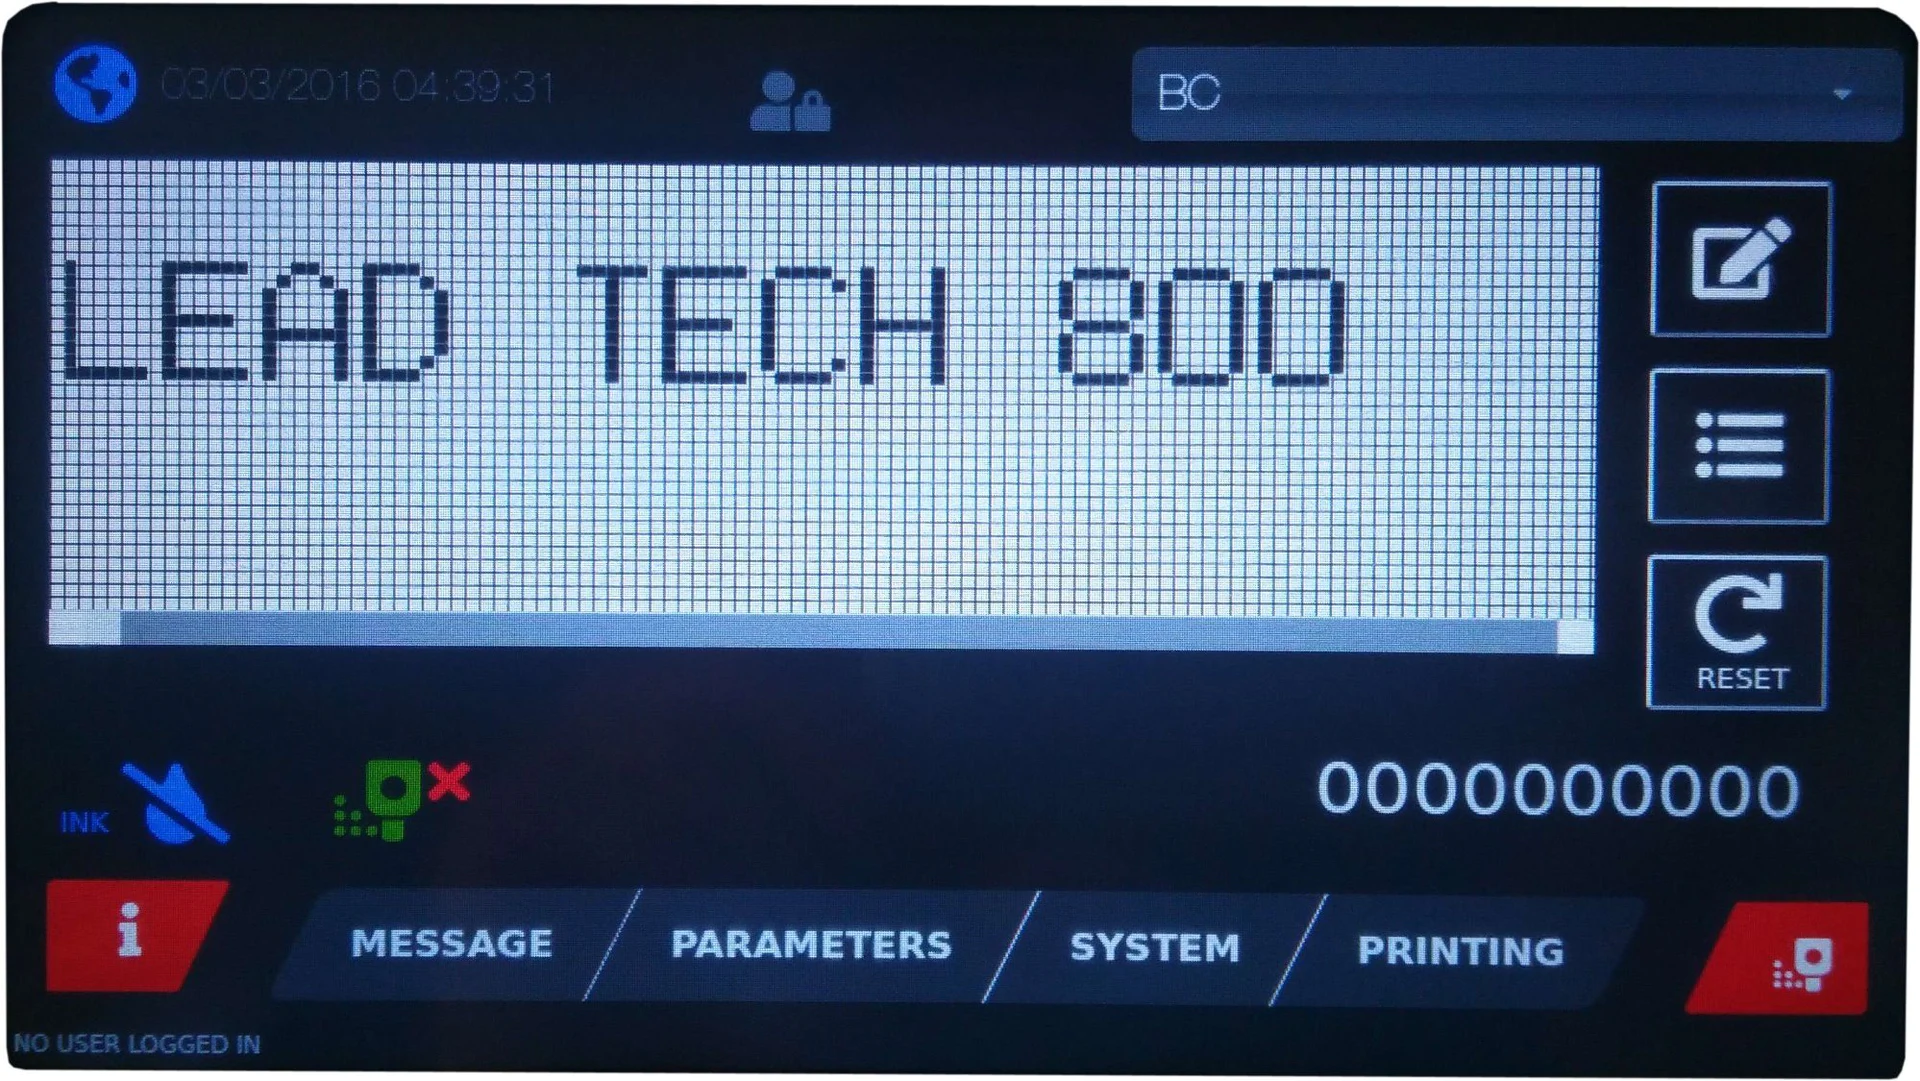 Lead Tech Lt800 Digital Printer for Cable Printing